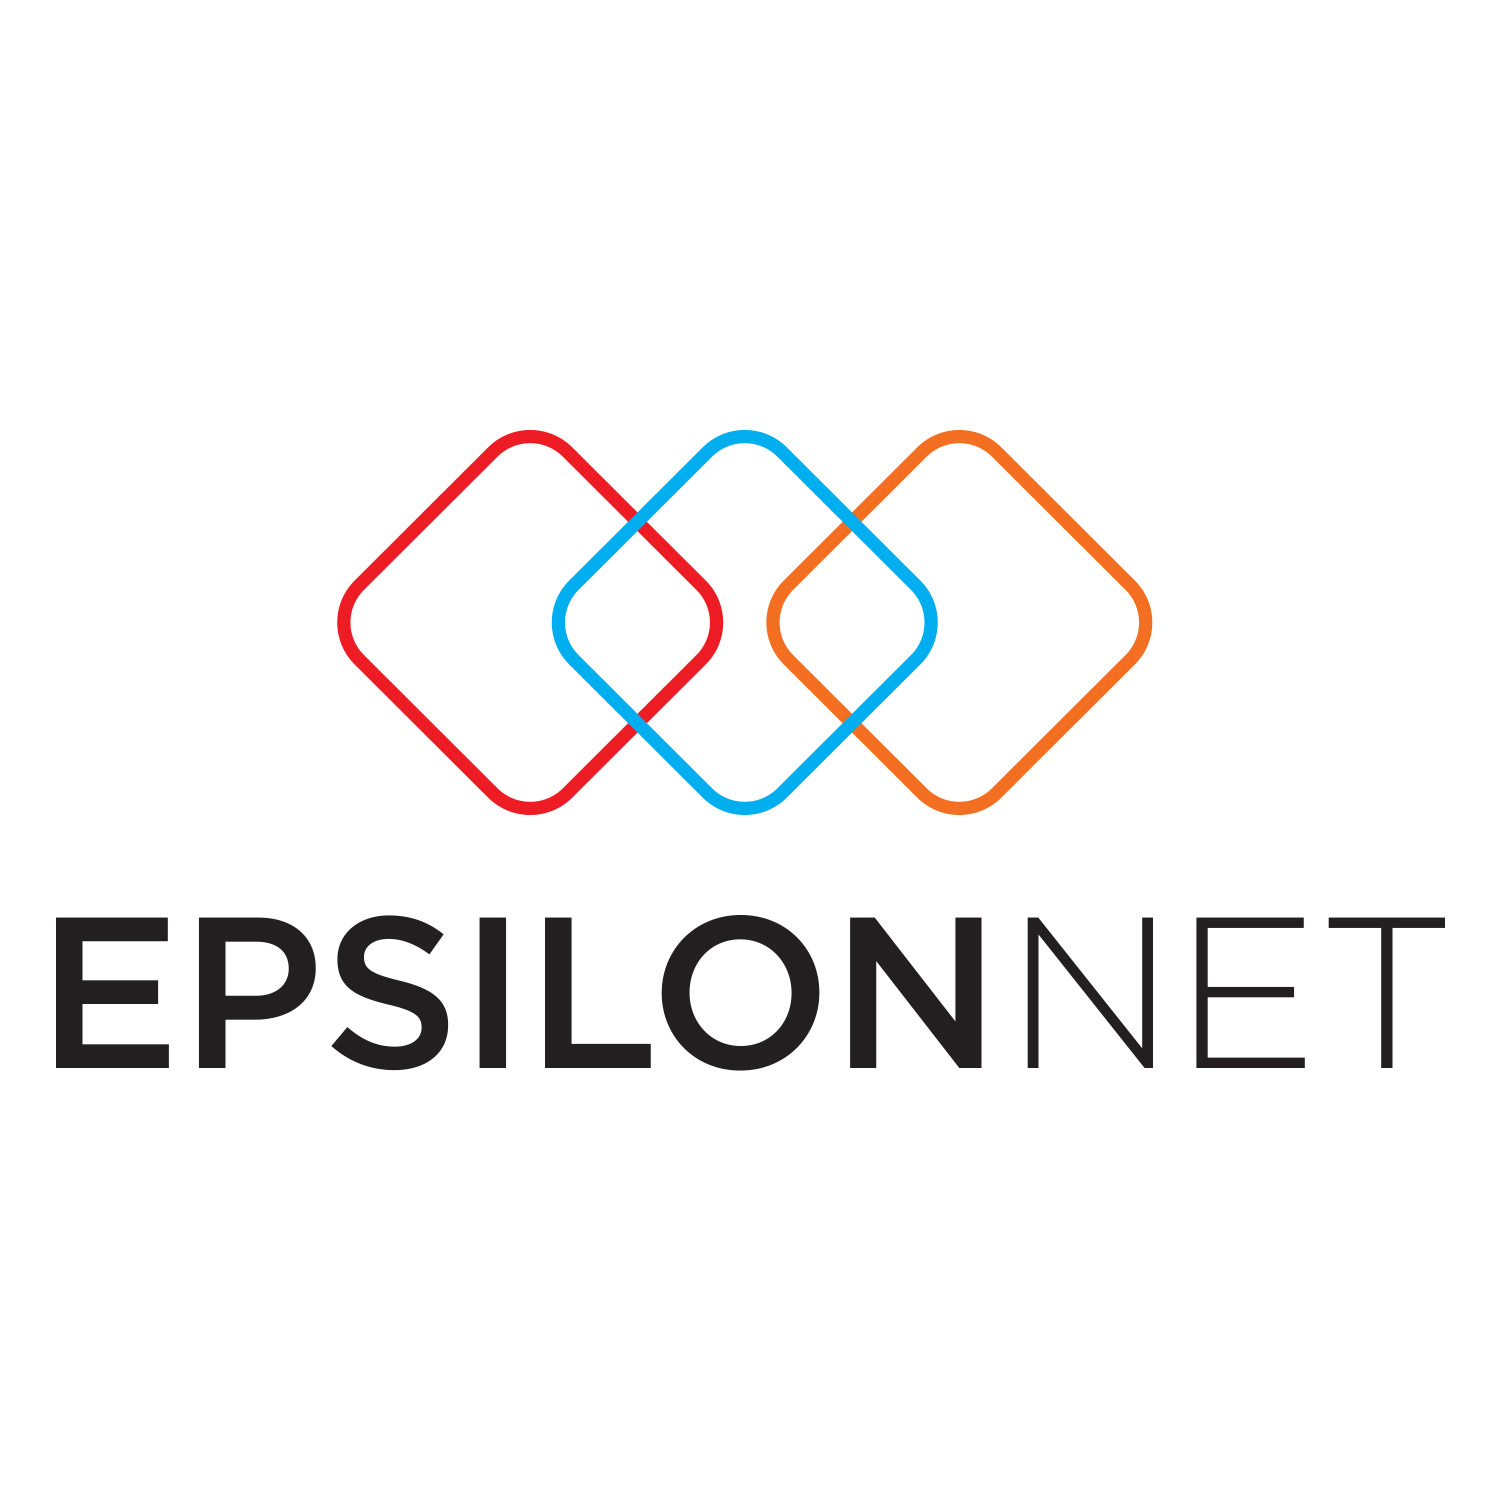 Epsilon NET